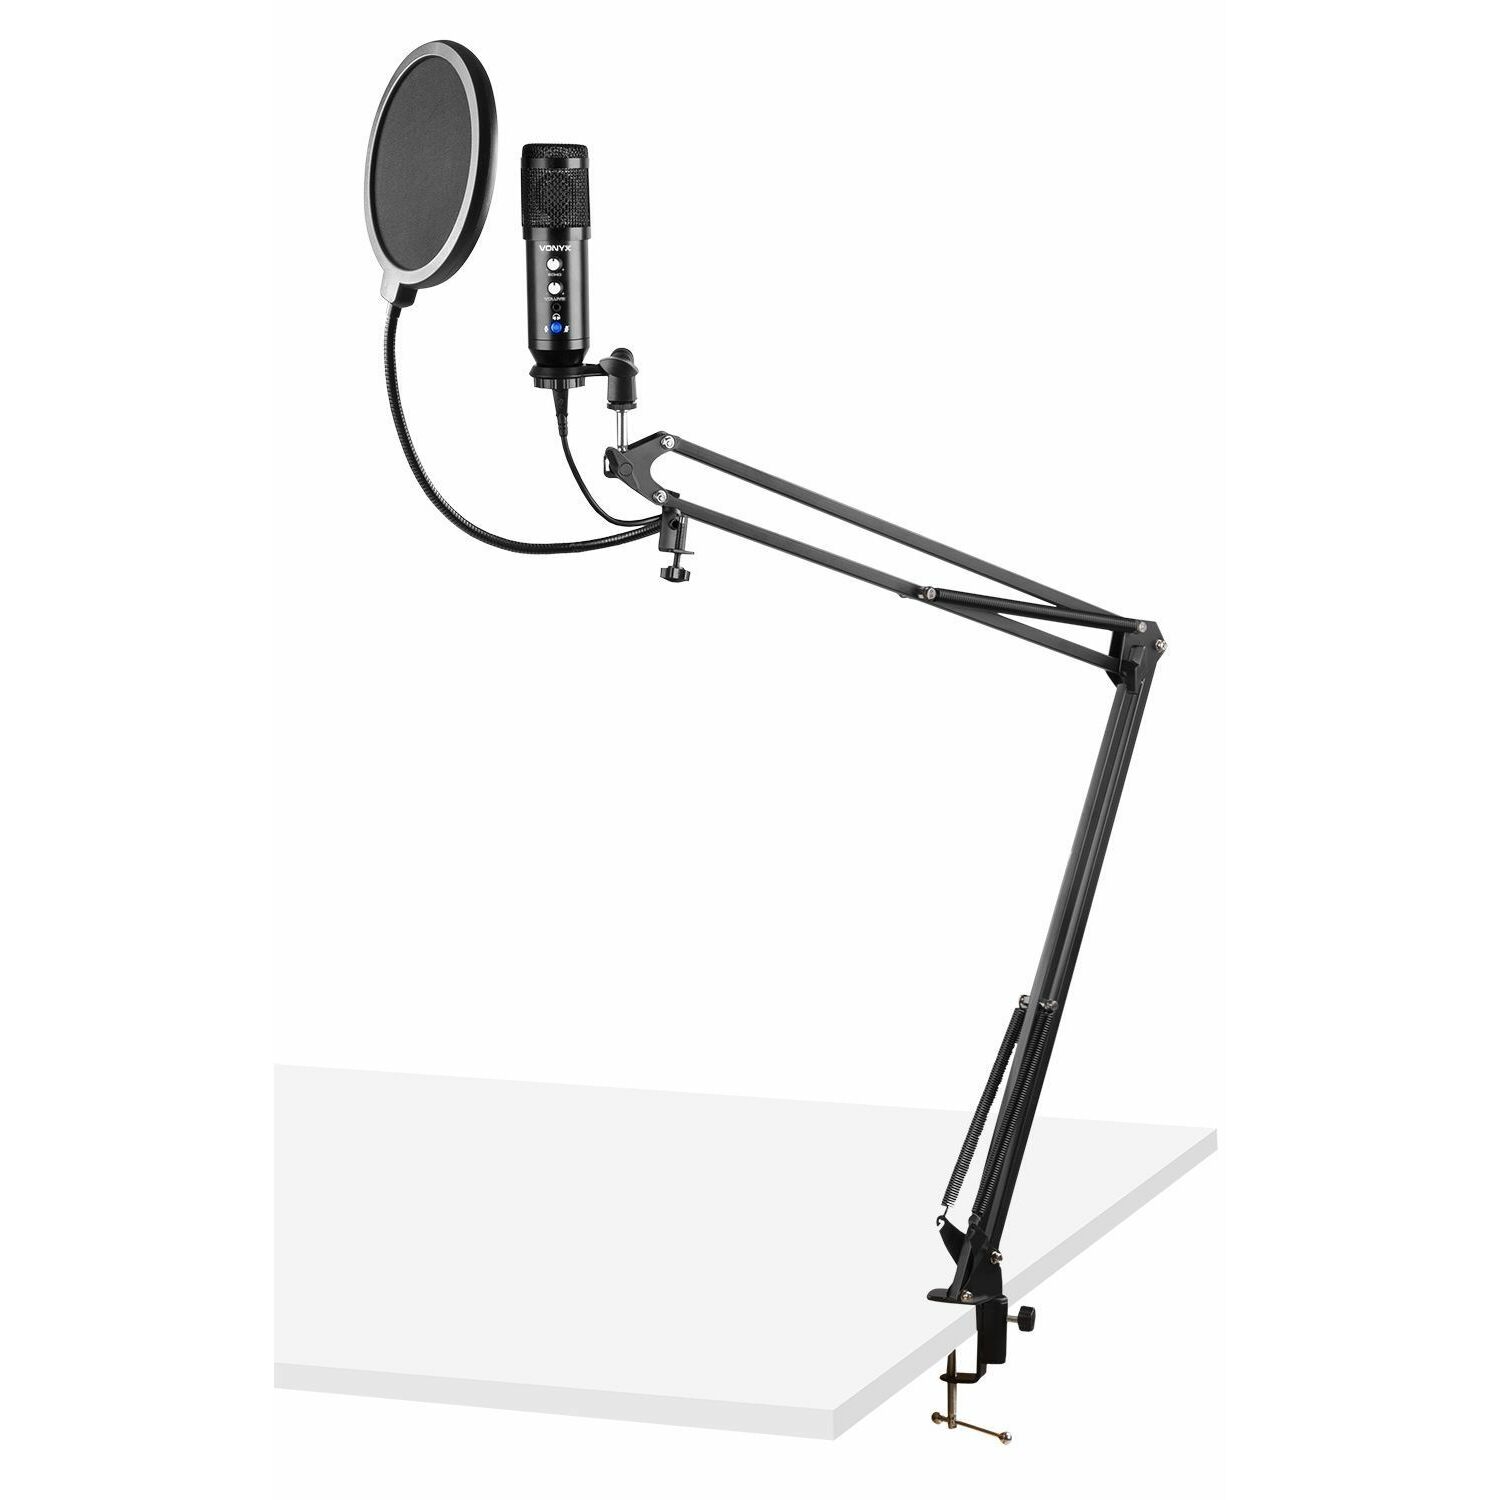 Studio microfoon - Vonyx CMS320B USB microfoon met echo en arm - Zwart